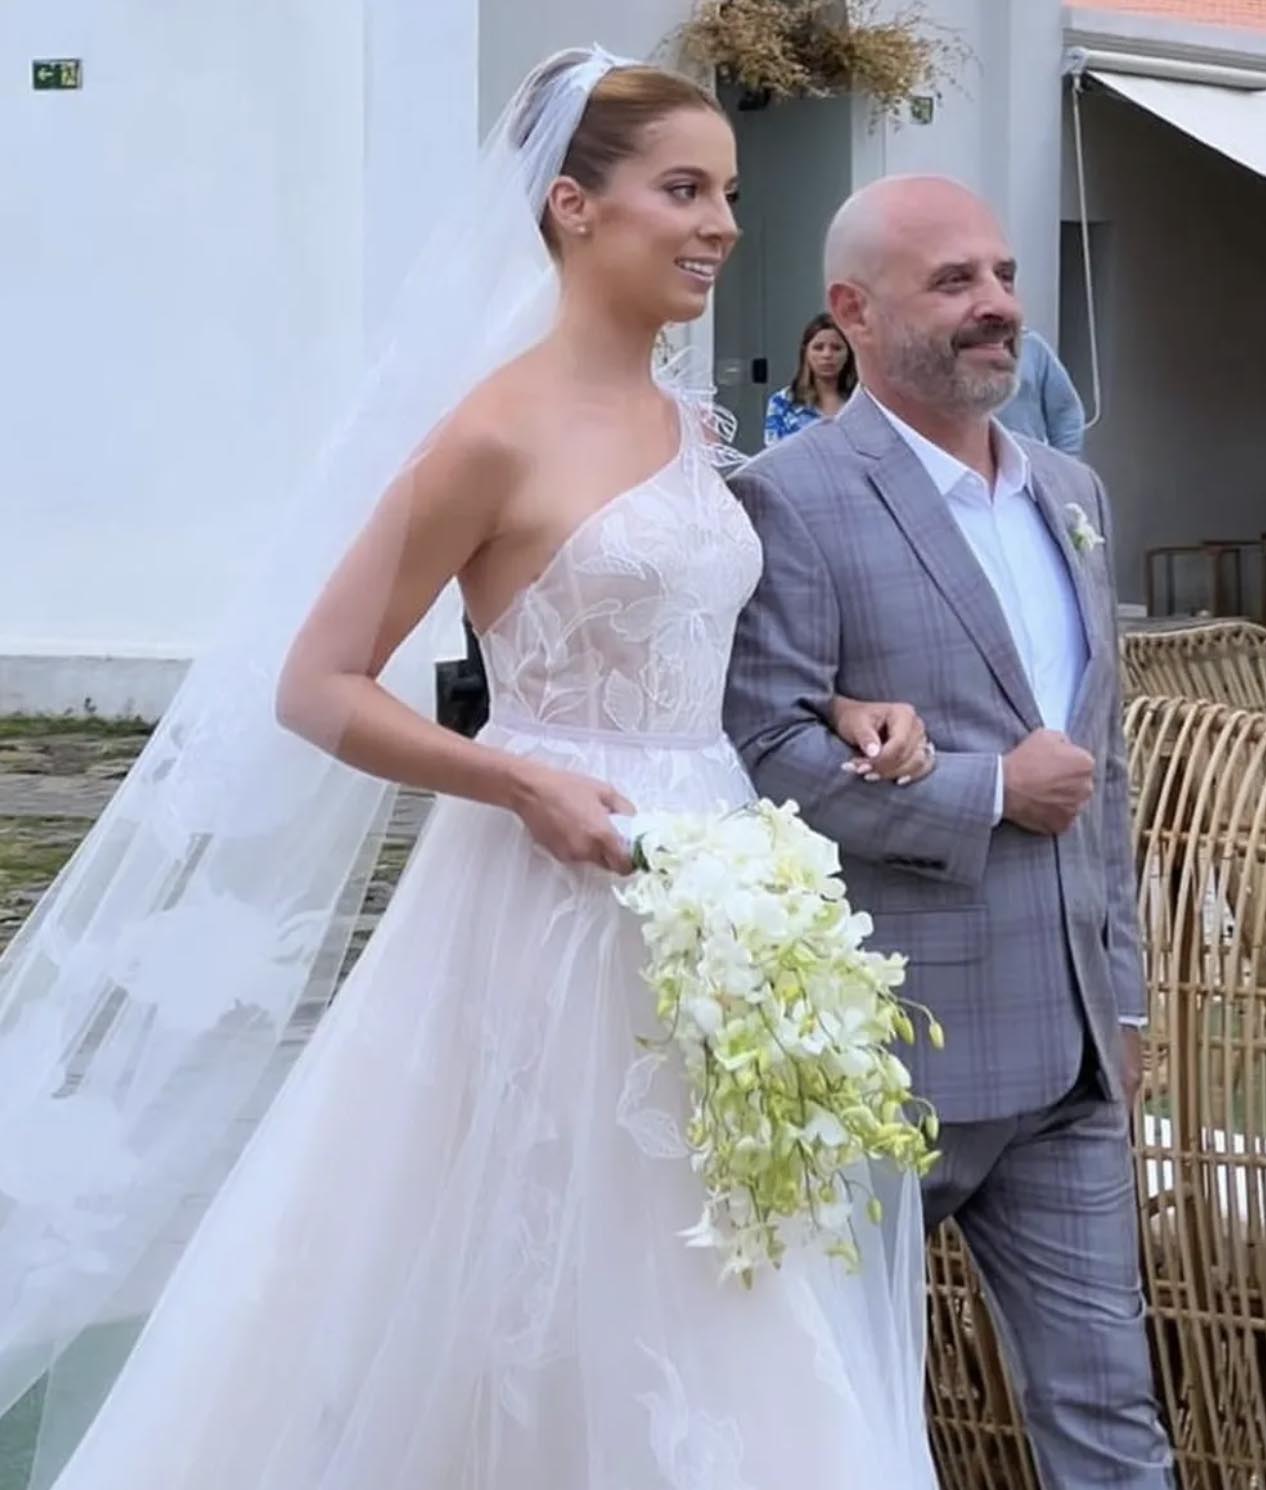 Casamento de Henrique Dubugras e Laura Fiuza em Fernando de Noronha